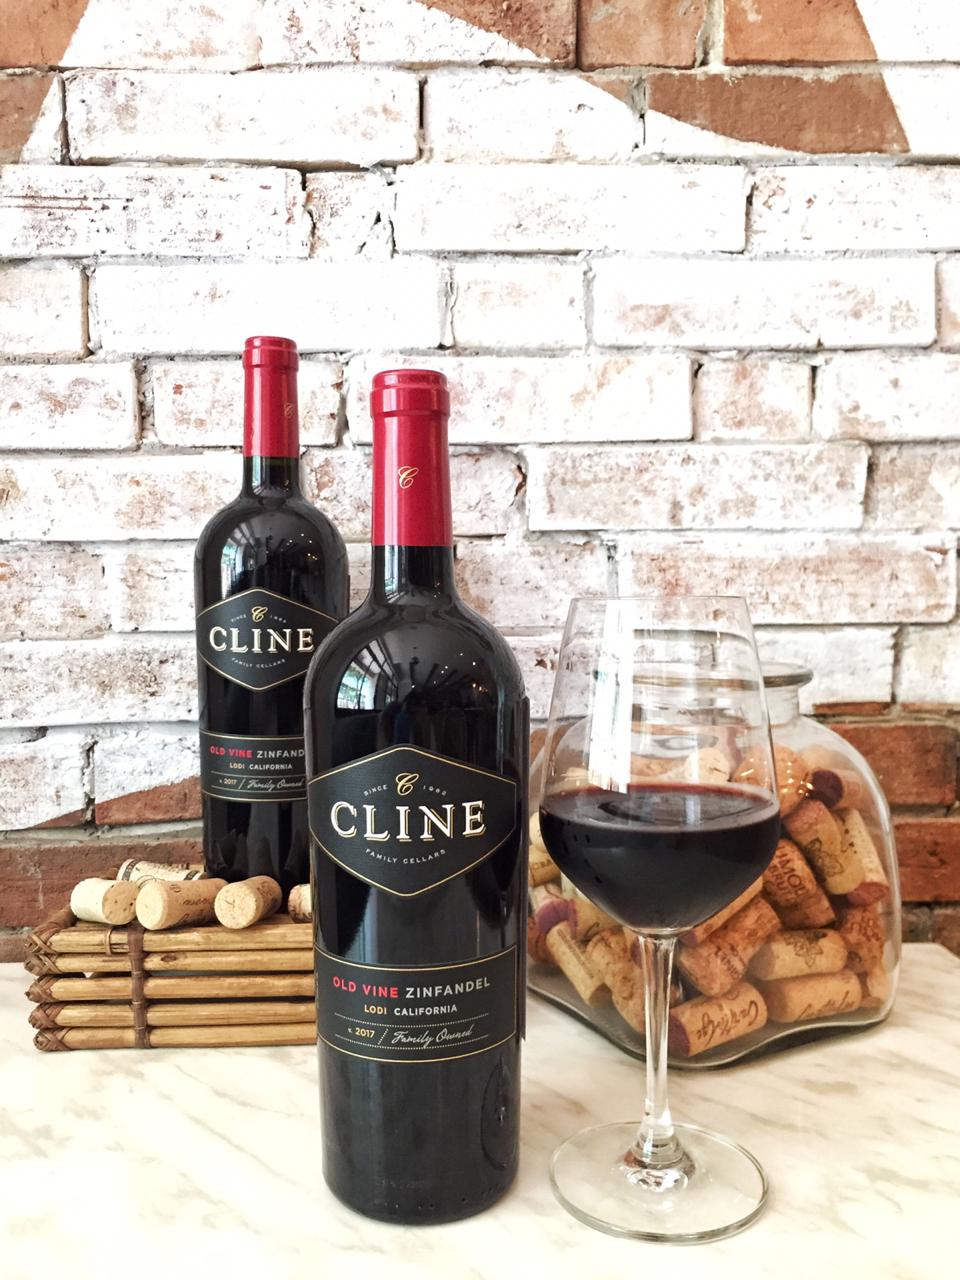 Cline - Old Vine Zinfandel 2016 California